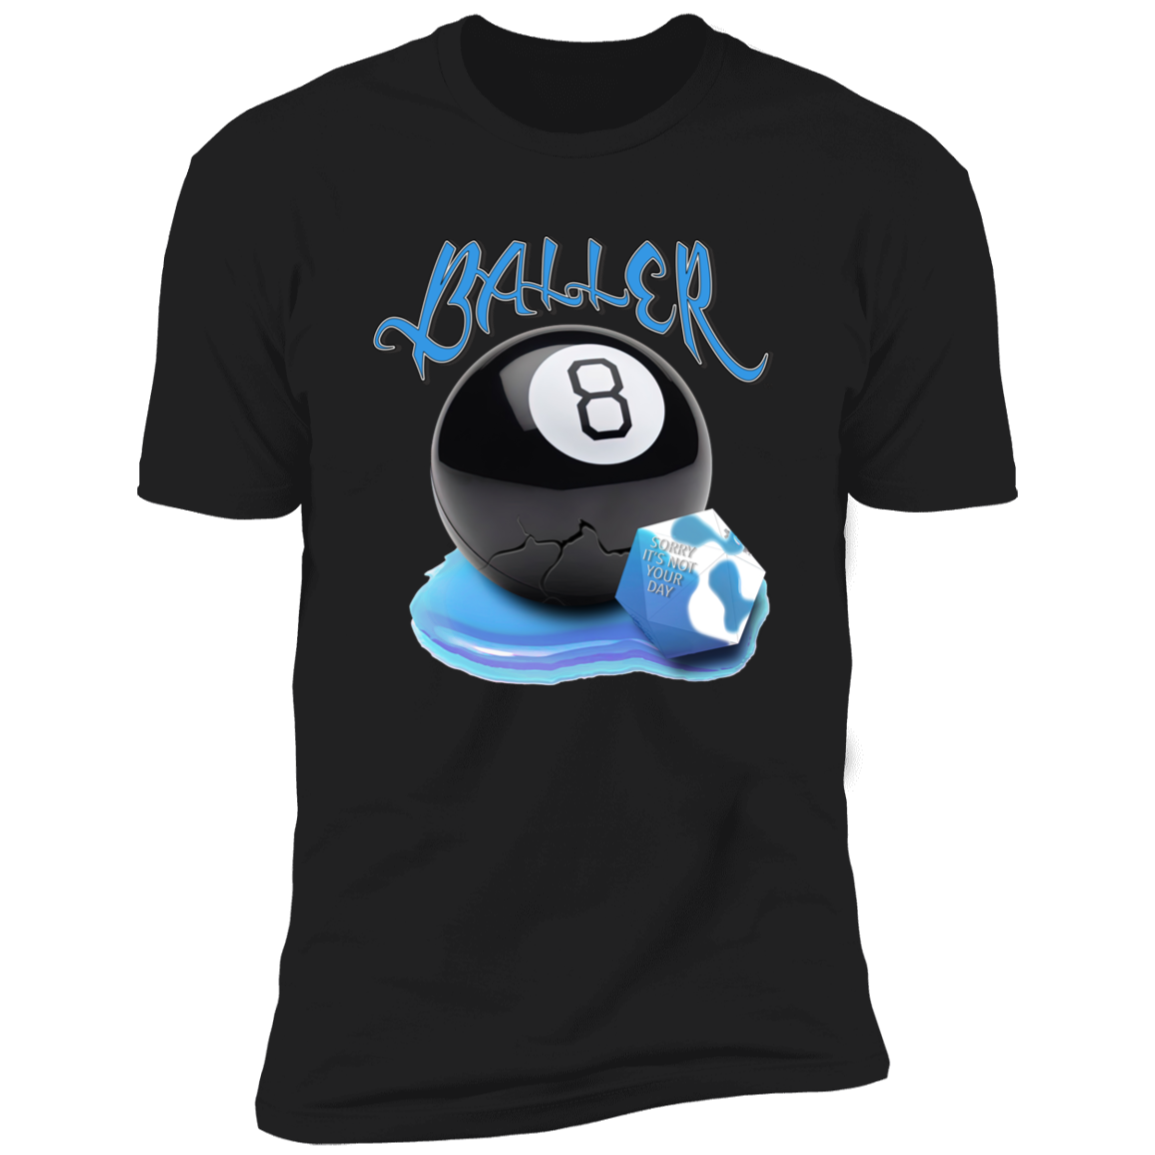 BALLER - 8-ball Tee